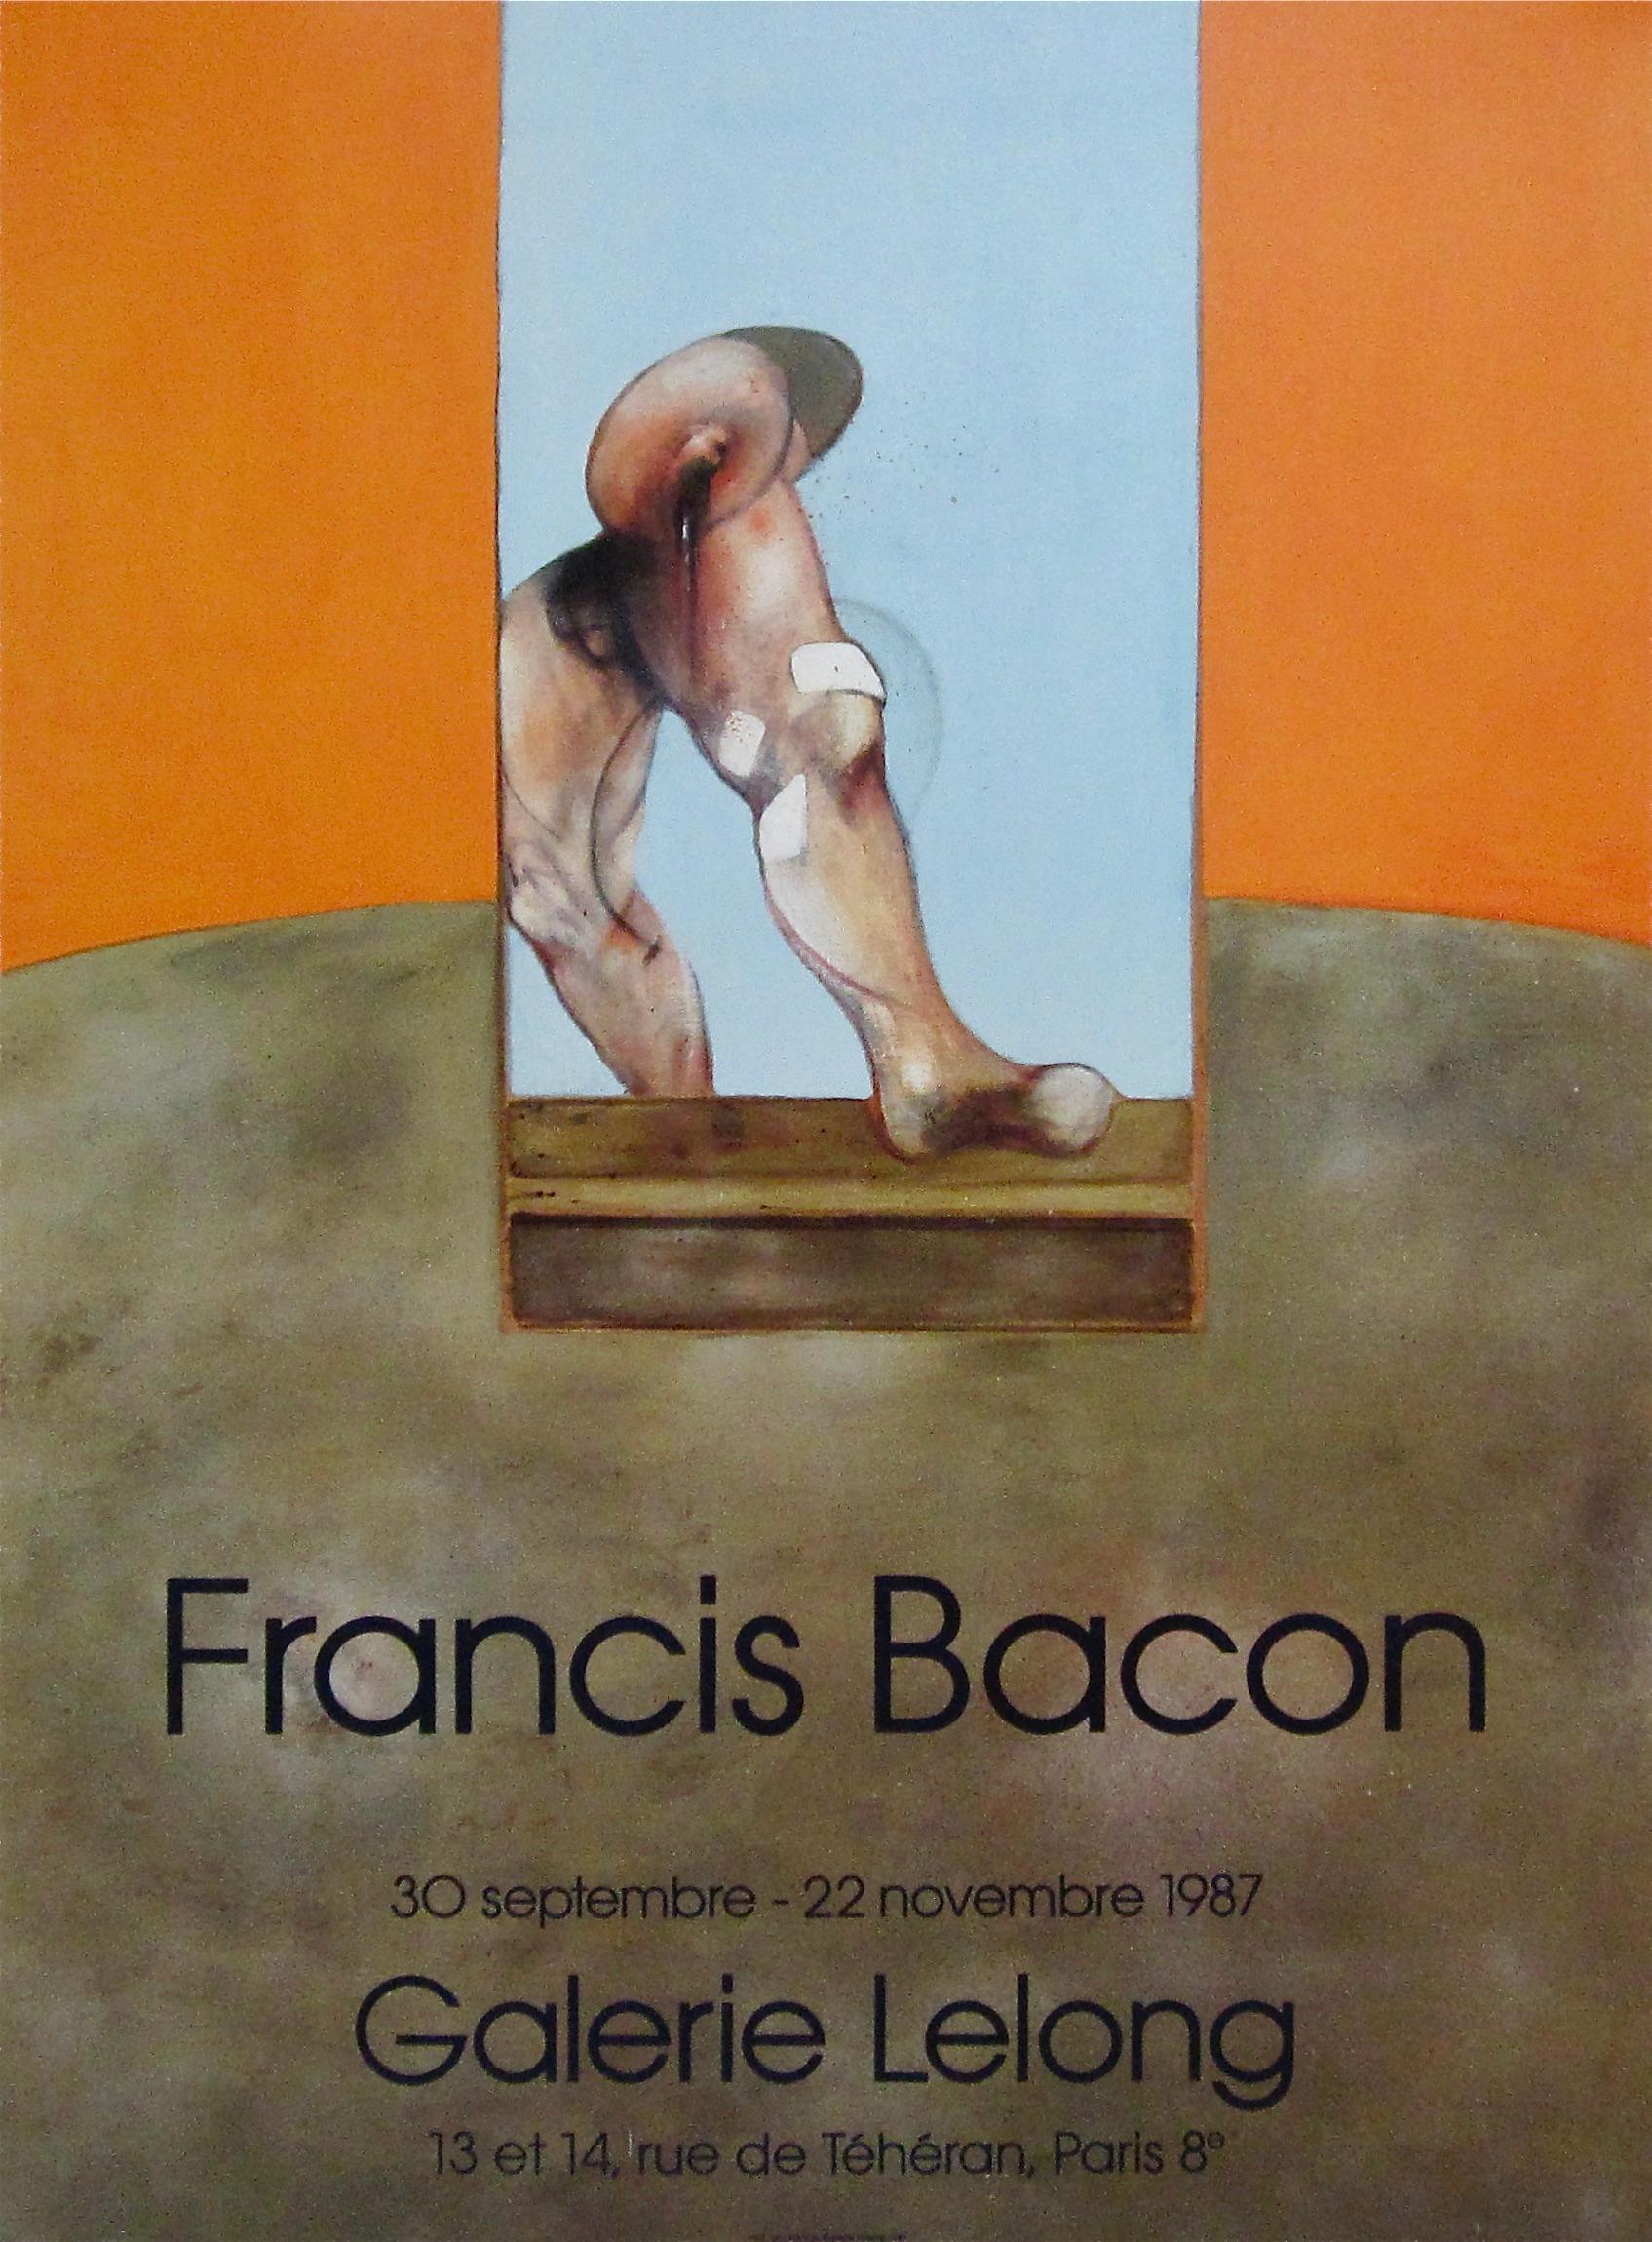 Francis Bacon Figurative Print – Bacon, Ohne Titel, 1987 (nachdem)